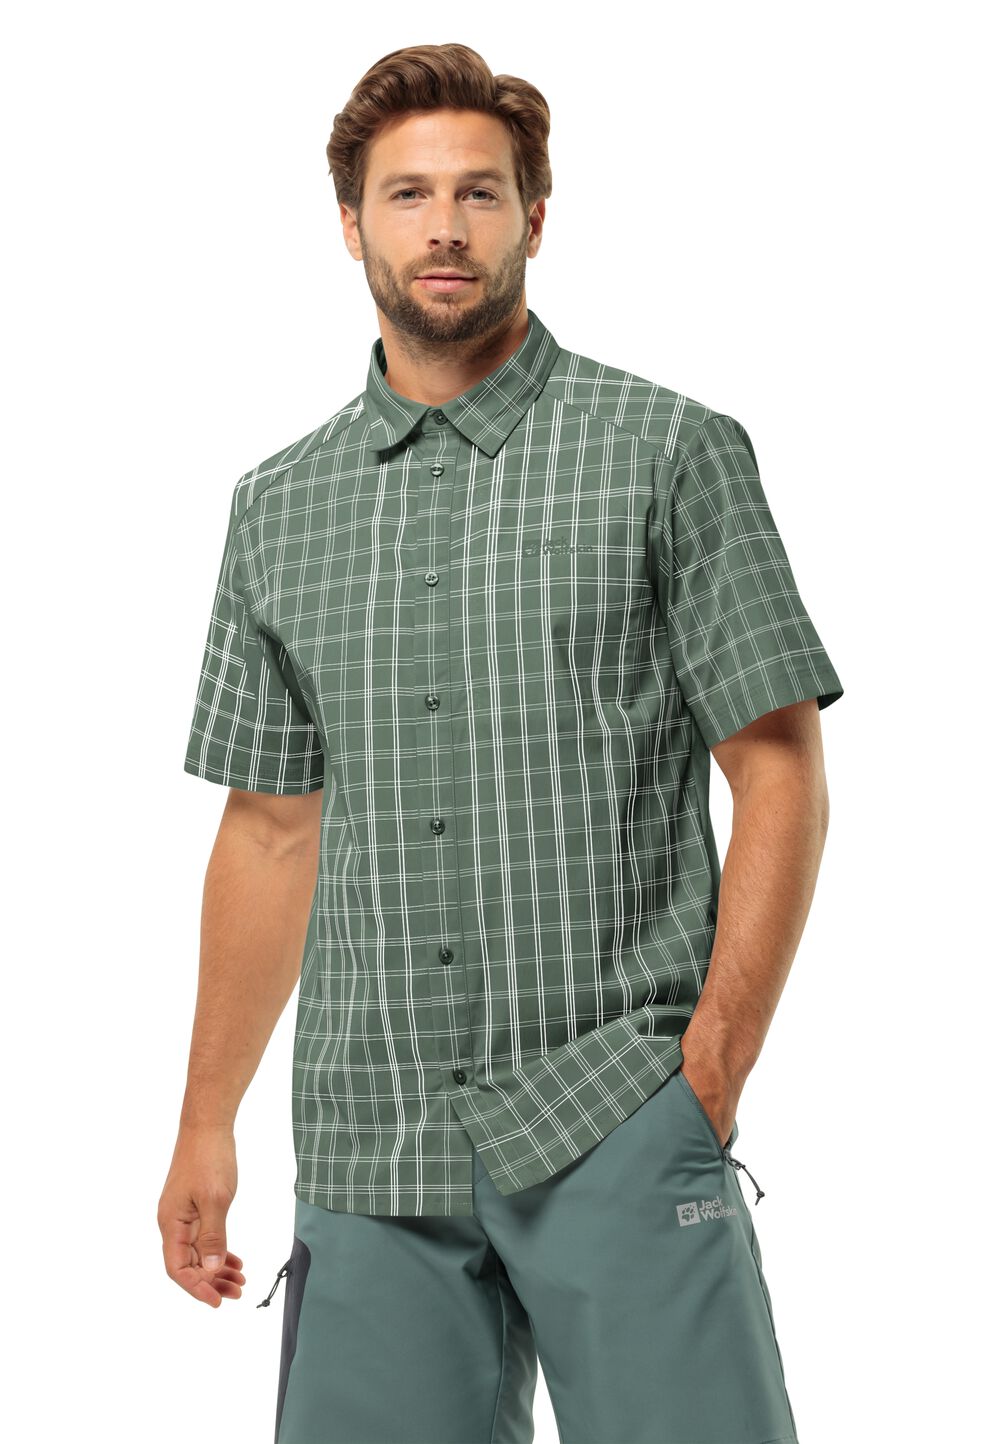 Jack Wolfskin Norbo S S Shirt Men Overhemd met korte mouwen Heren M hedge green checks hedge green checks